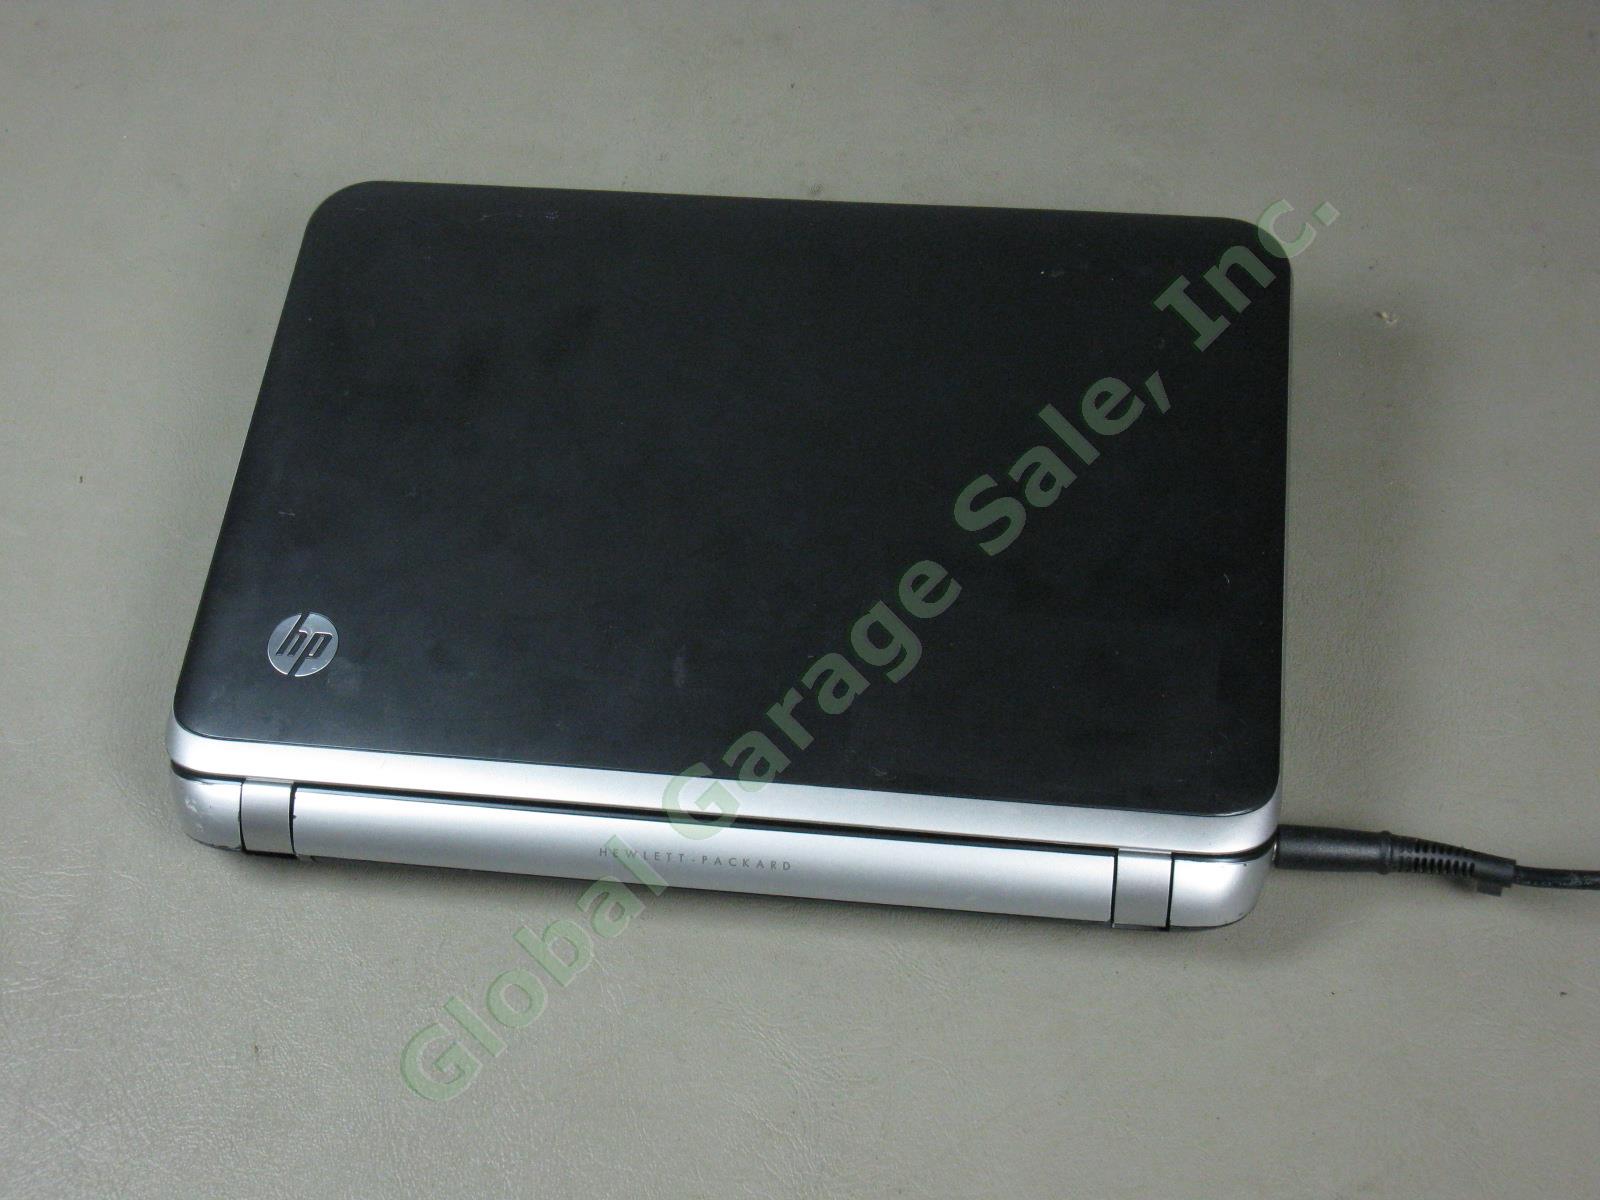 HP 3115m 11.6" Notebook Laptop Computer AMD 1.65GHz 4GB 320GB Windows 7 Ultim NR 3